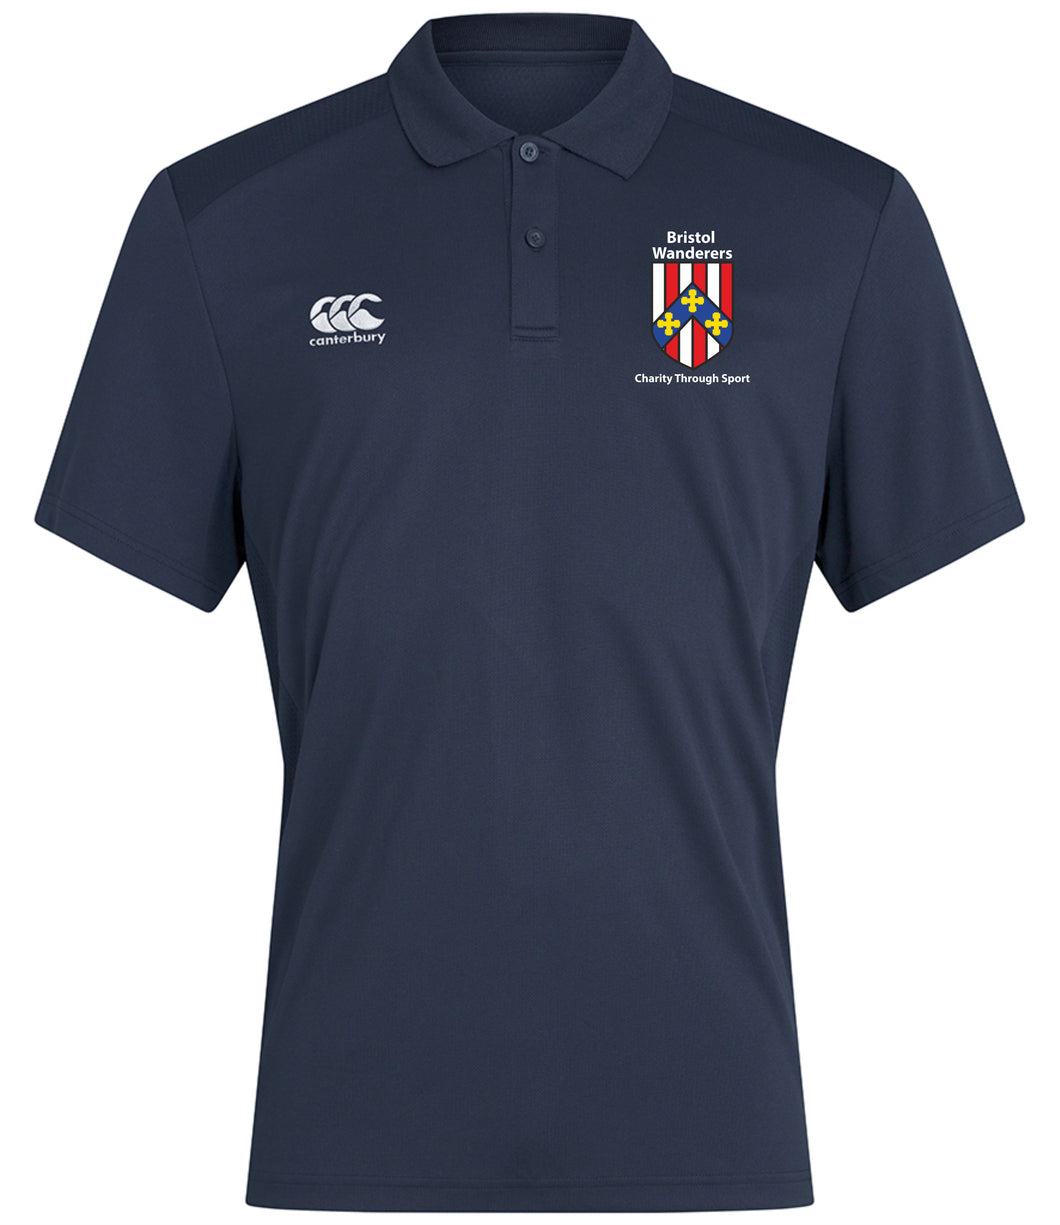 Bristol Wanderers Charity Through Sport - Canterbury Club Dry Polo Shirt (Navy/White)